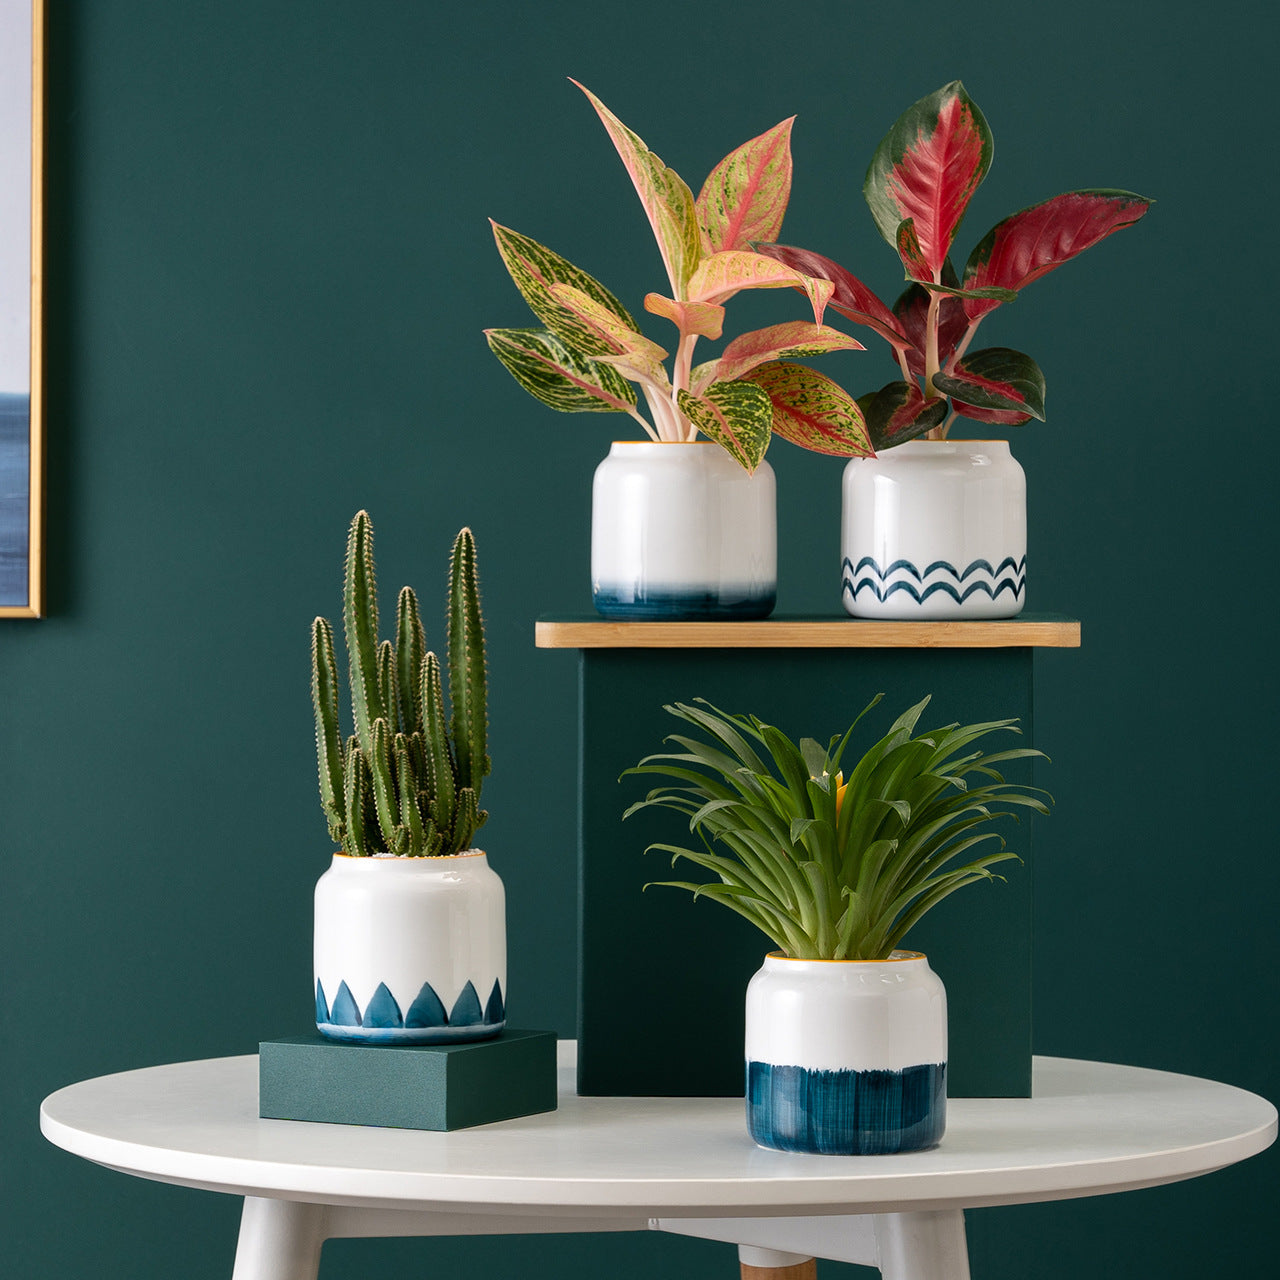 Vasi di ceramica per piante grasse per ambienti interni – AllaRicerca Shop